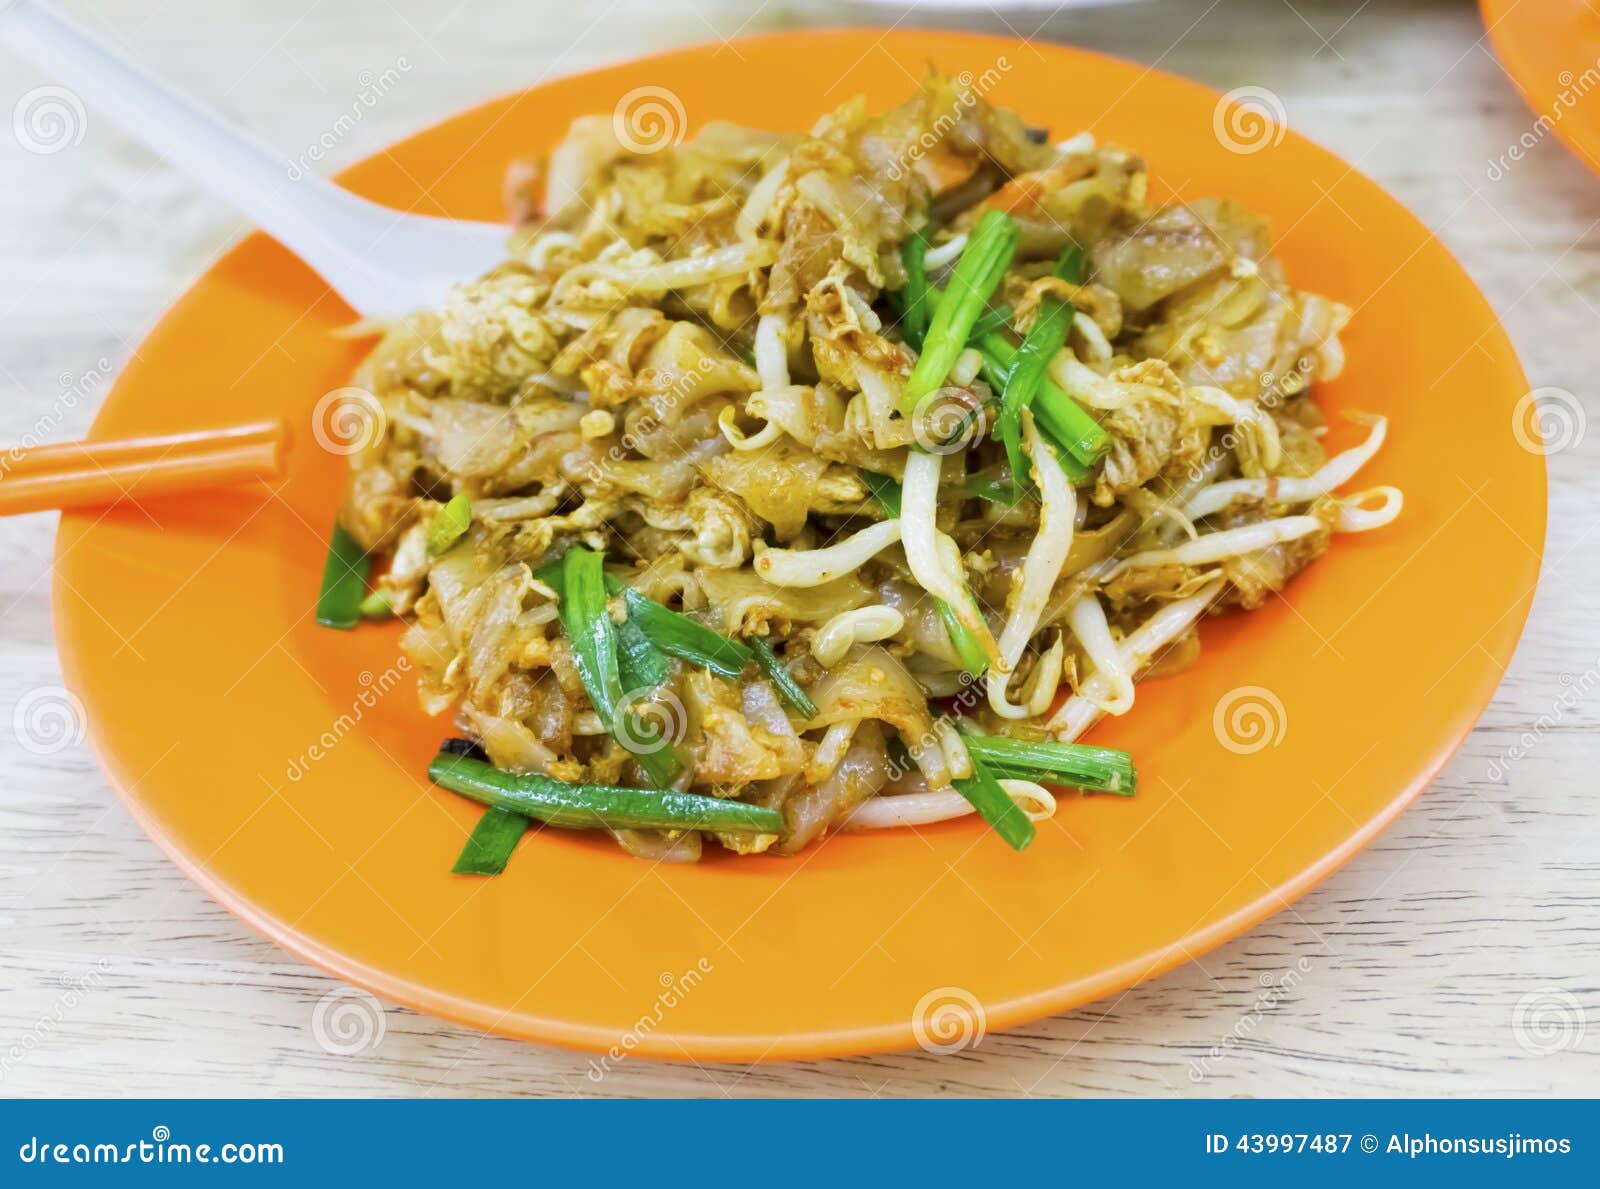 malaysian cuisine. char kway teow